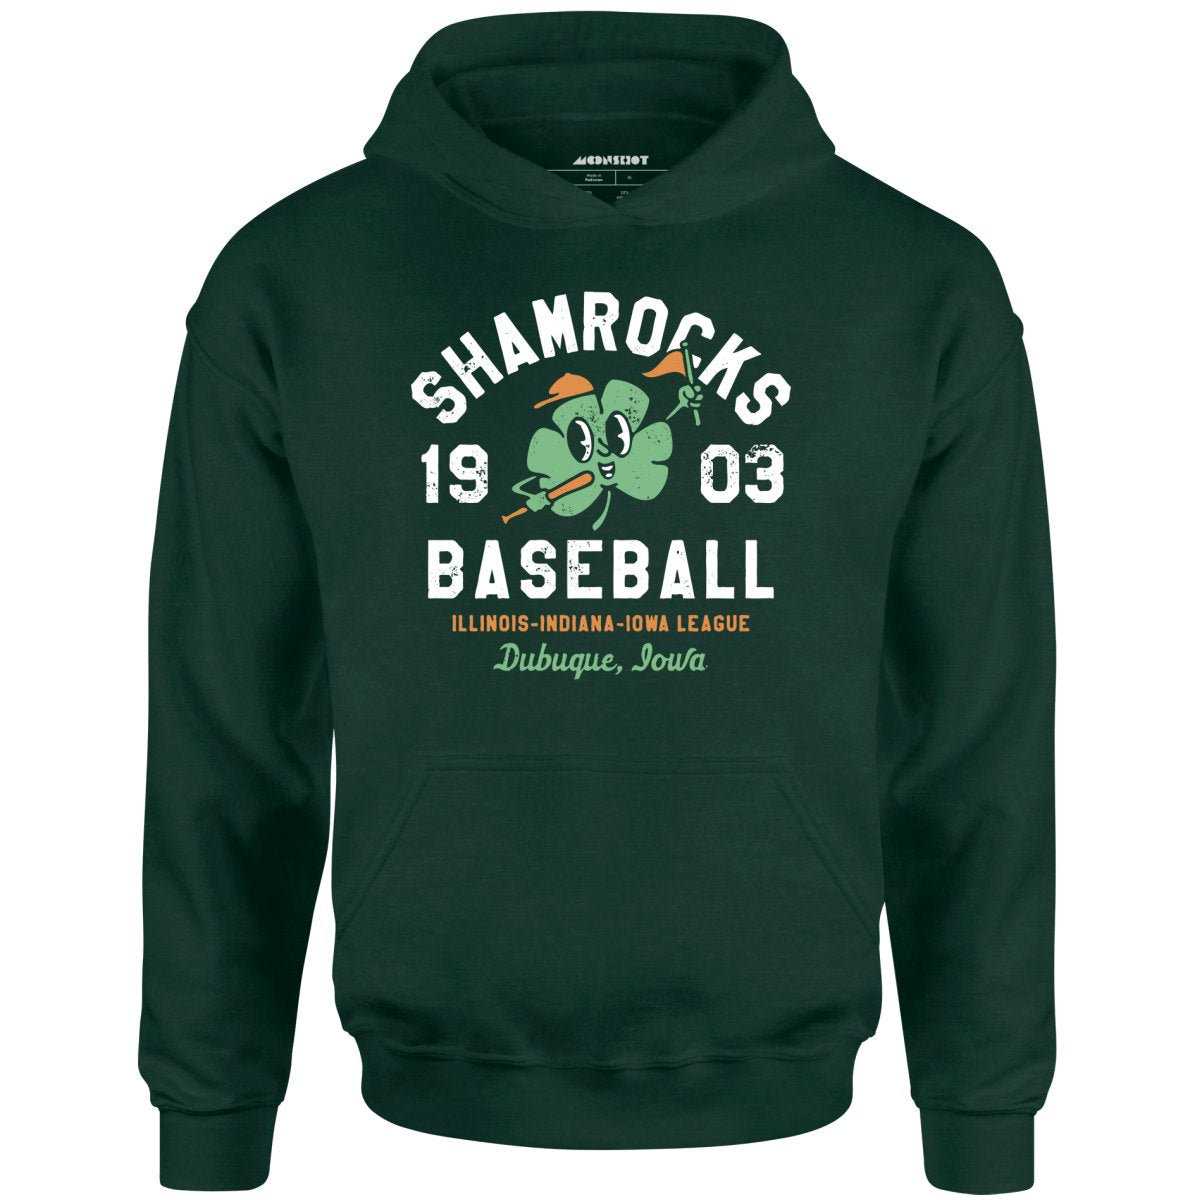 Dubuque Shamrocks - Iowa - Vintage Defunct Baseball Teams - Unisex Hoodie